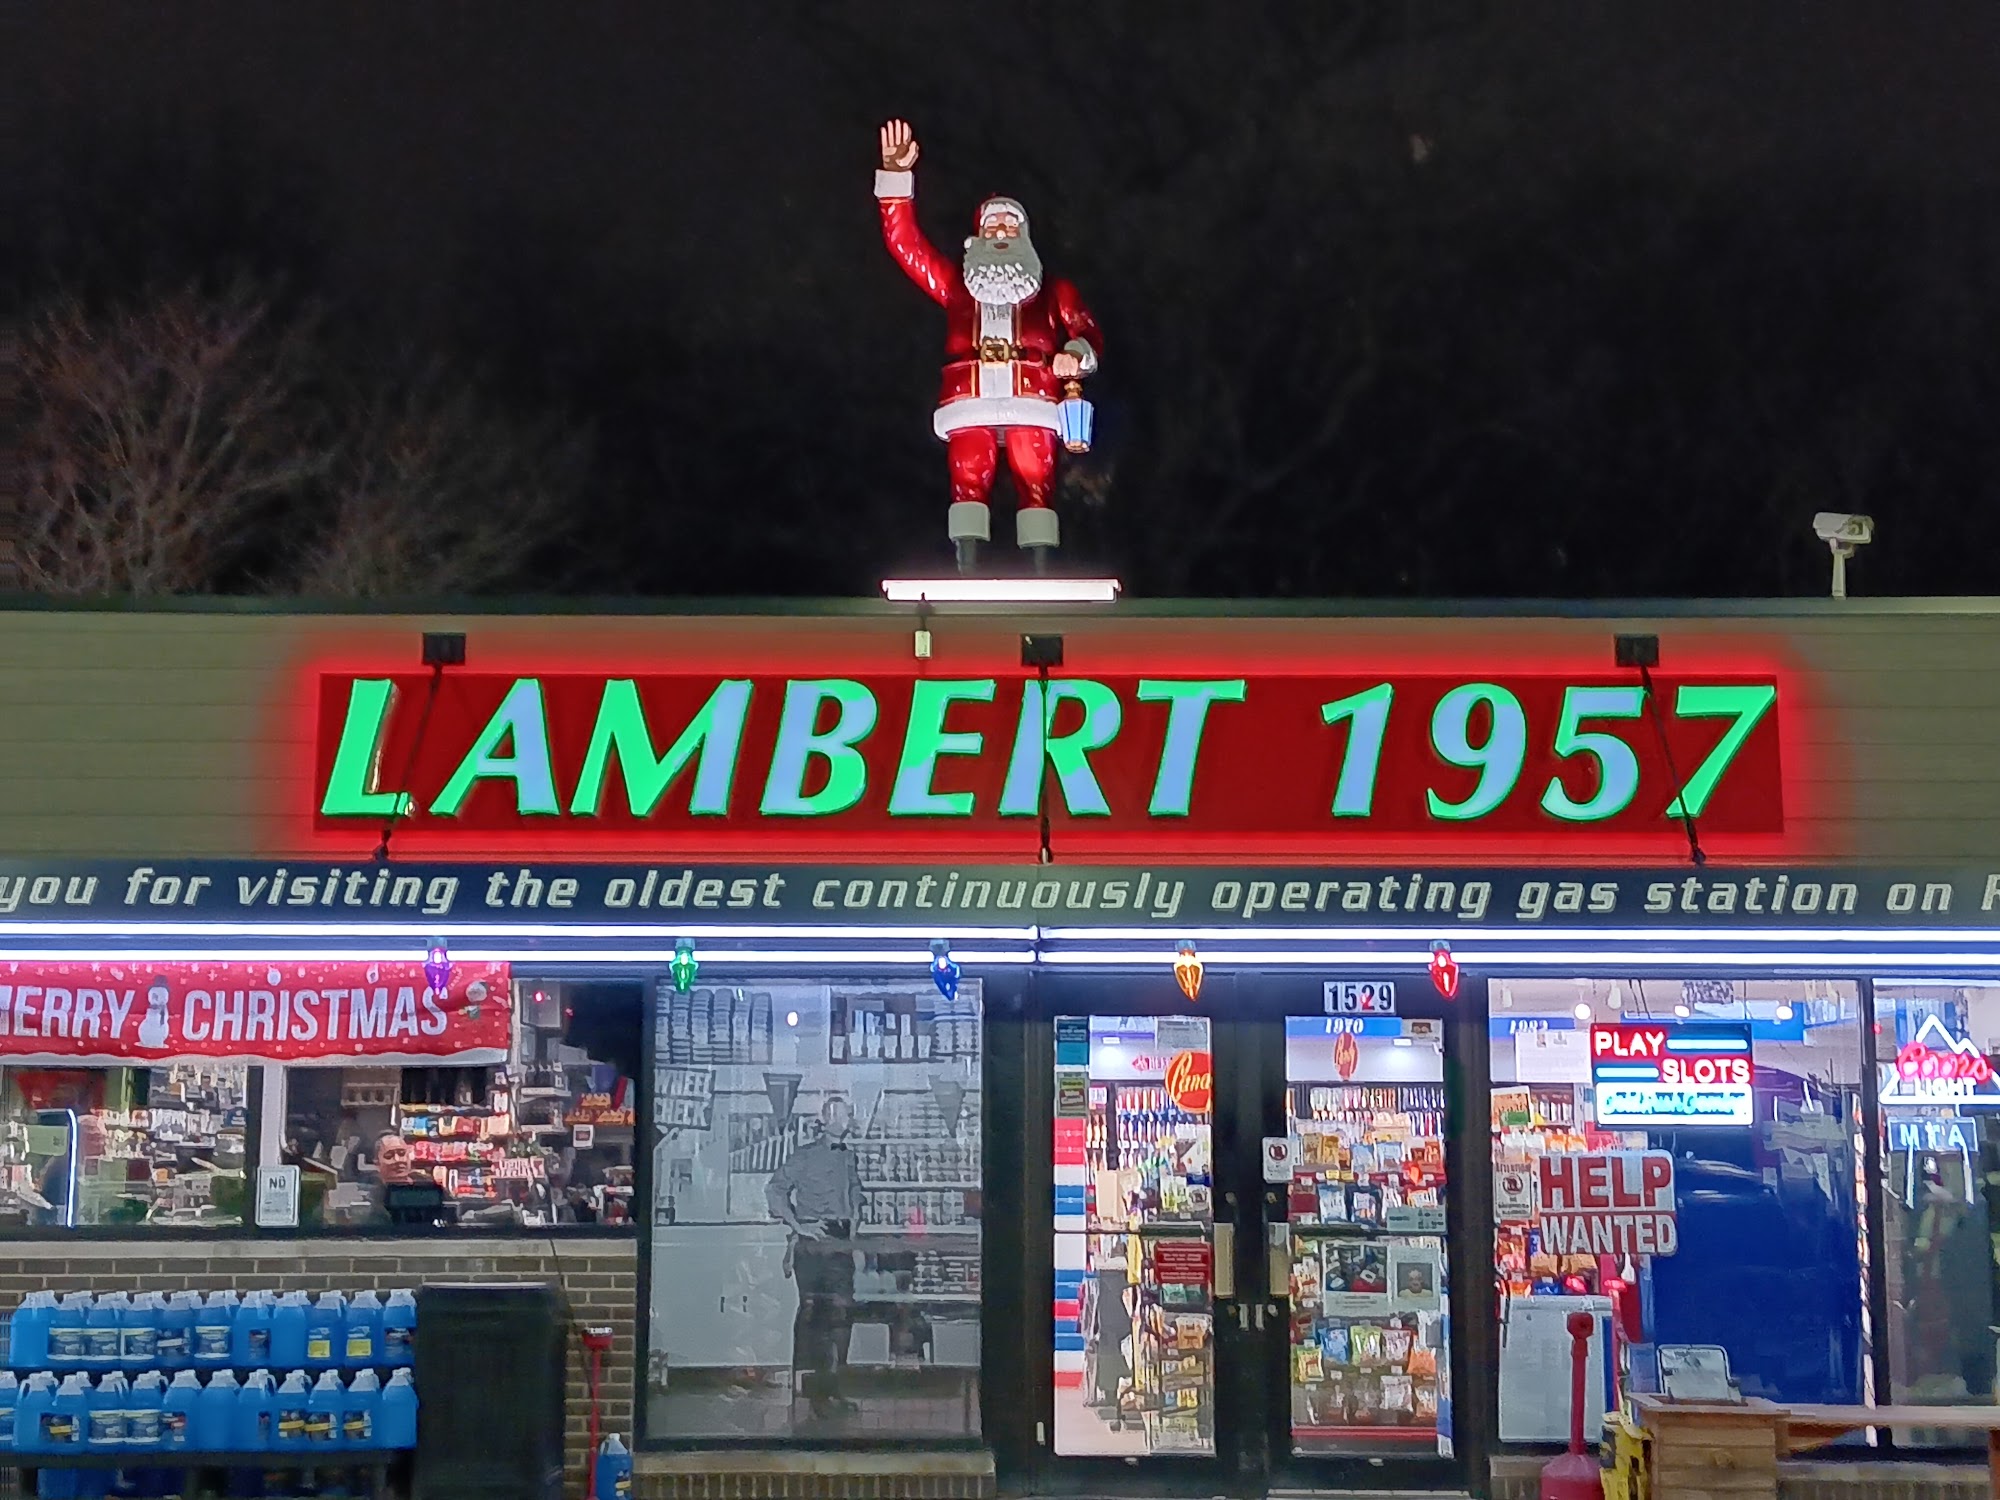 Lambert 1957 Mobil & Convenience Store